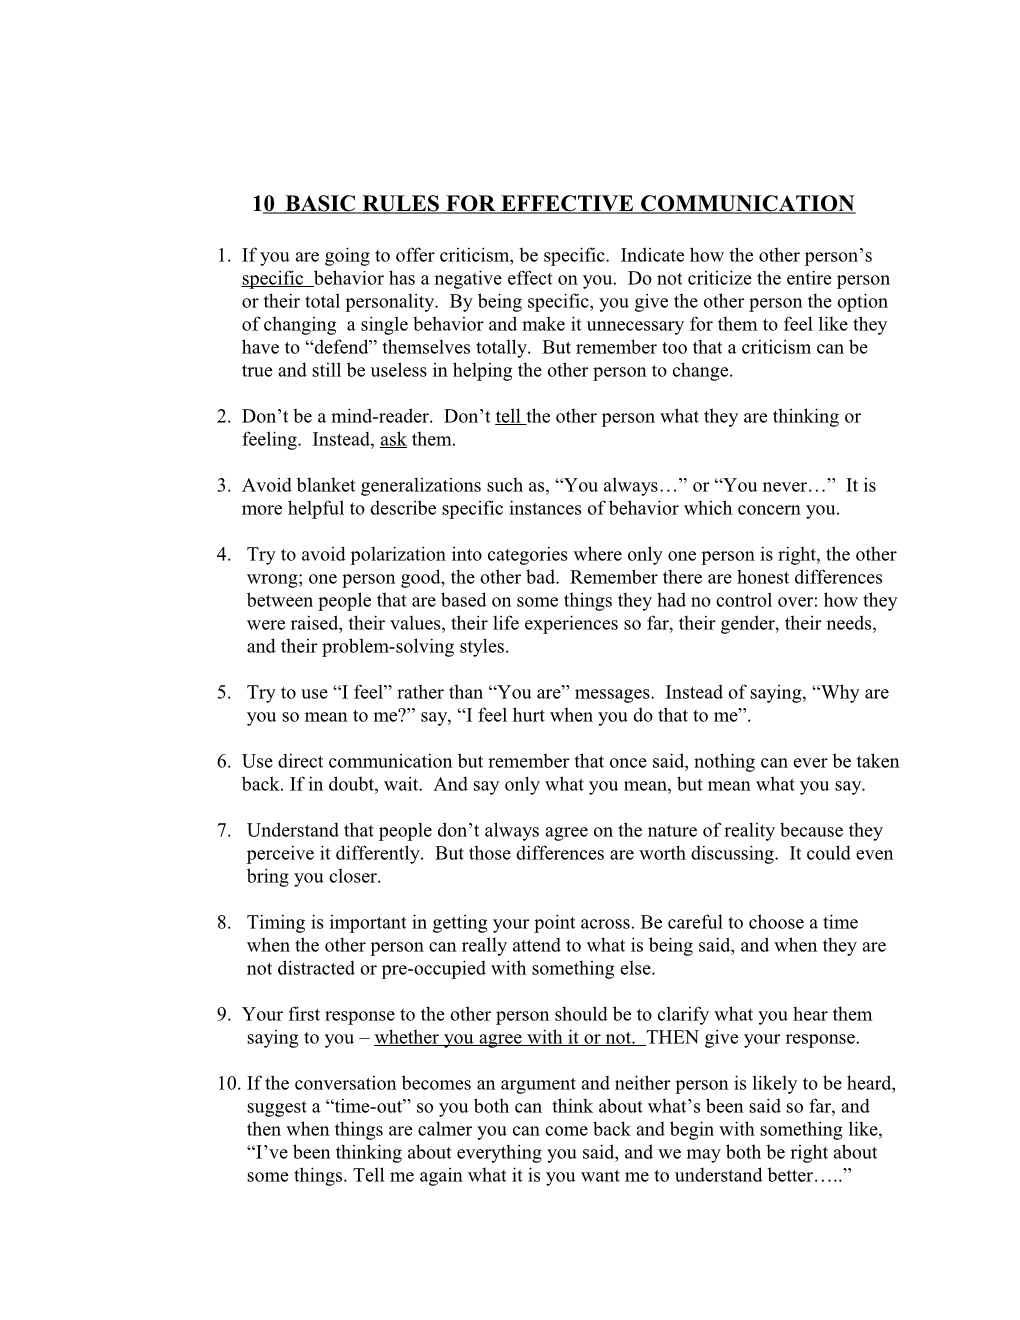 10 Basic Rules for Effective Communication